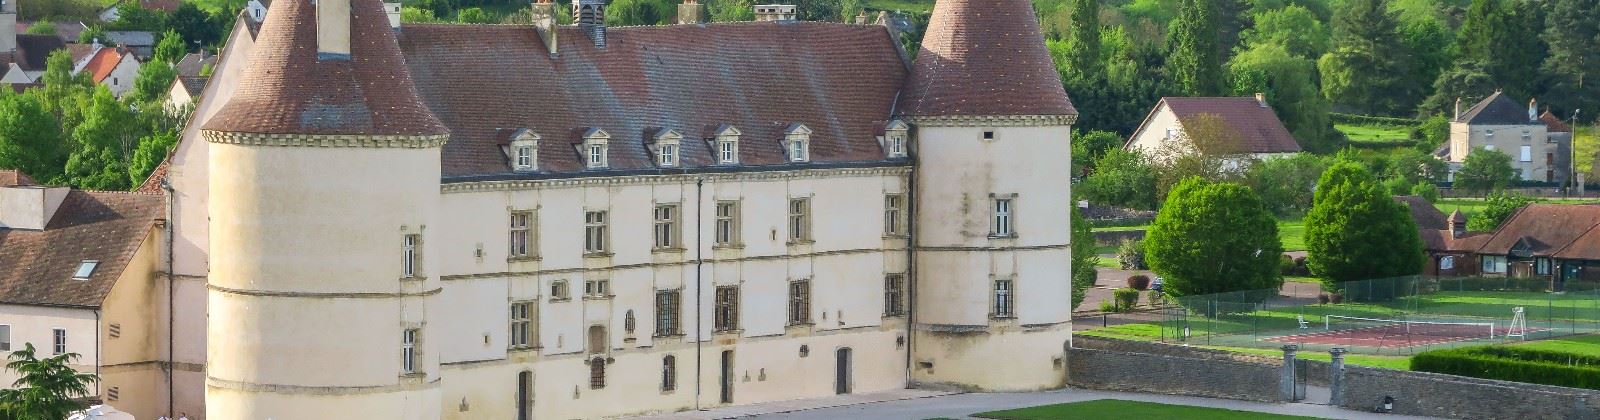 Chateau de chailly facade exterieure olevene 